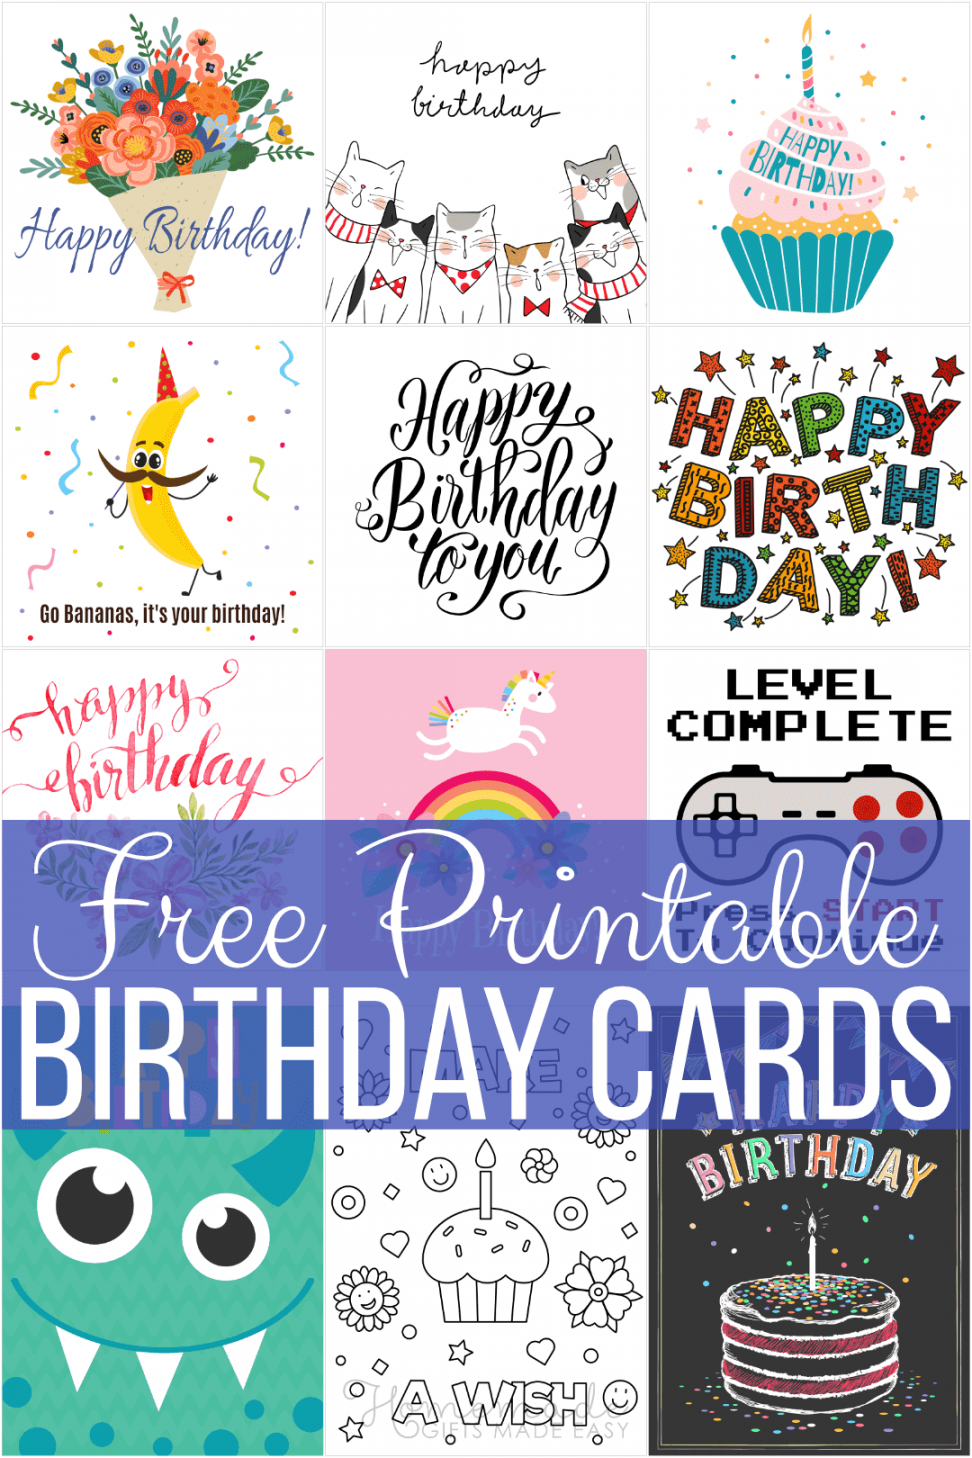 Free Birthday Cards Printable - Printable - Free Printable Birthday Cards for Everyone